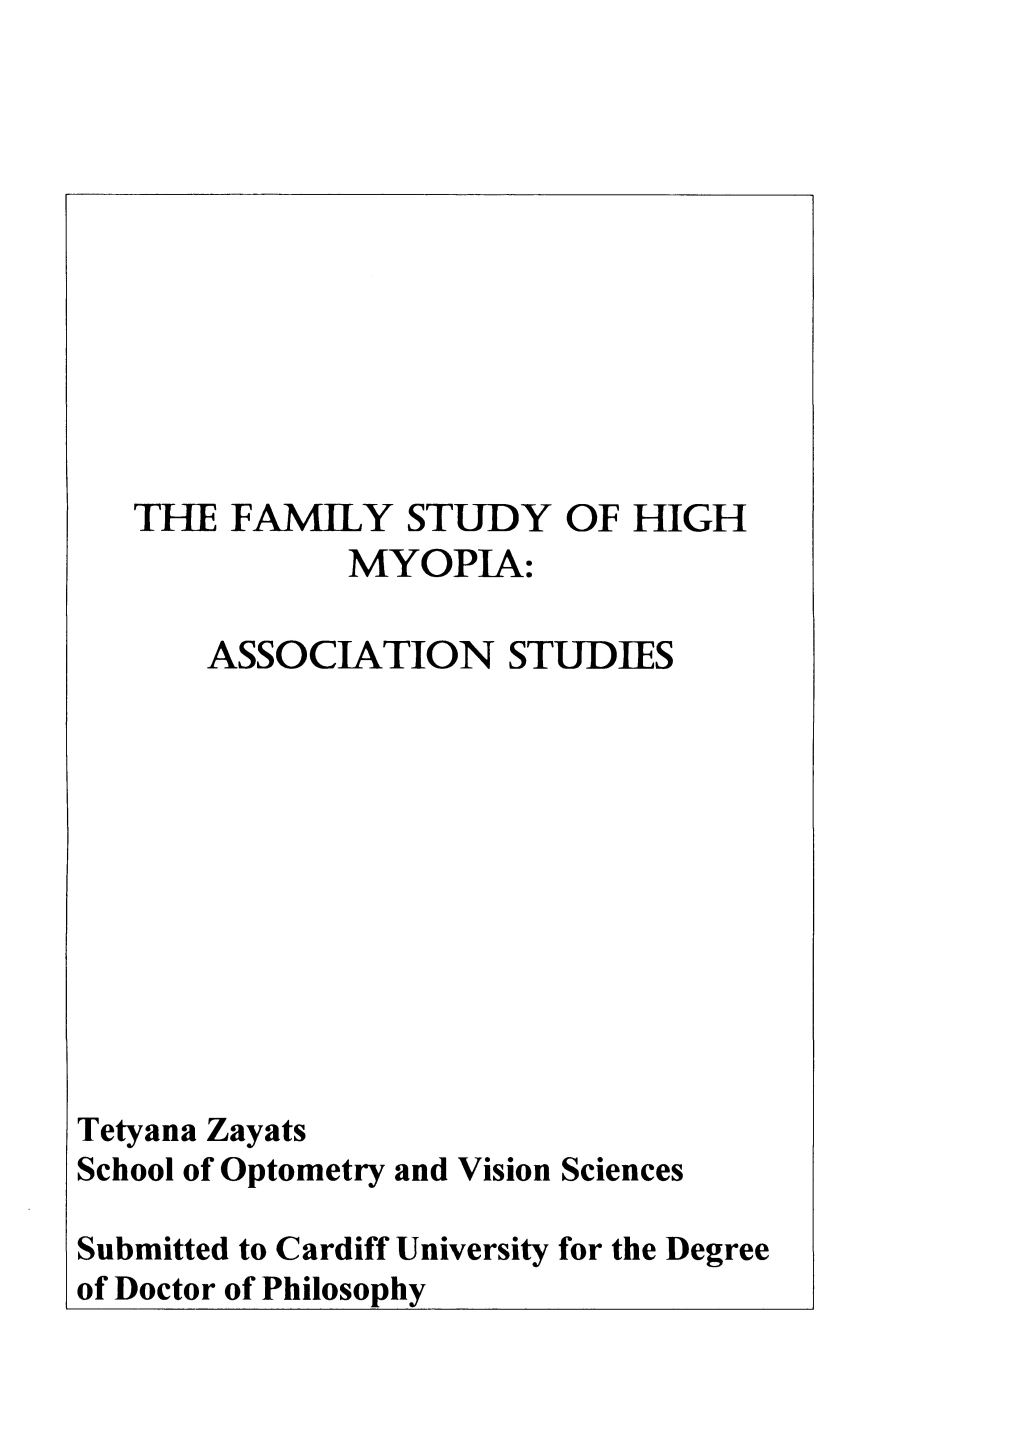 The Family Study of High Myopia